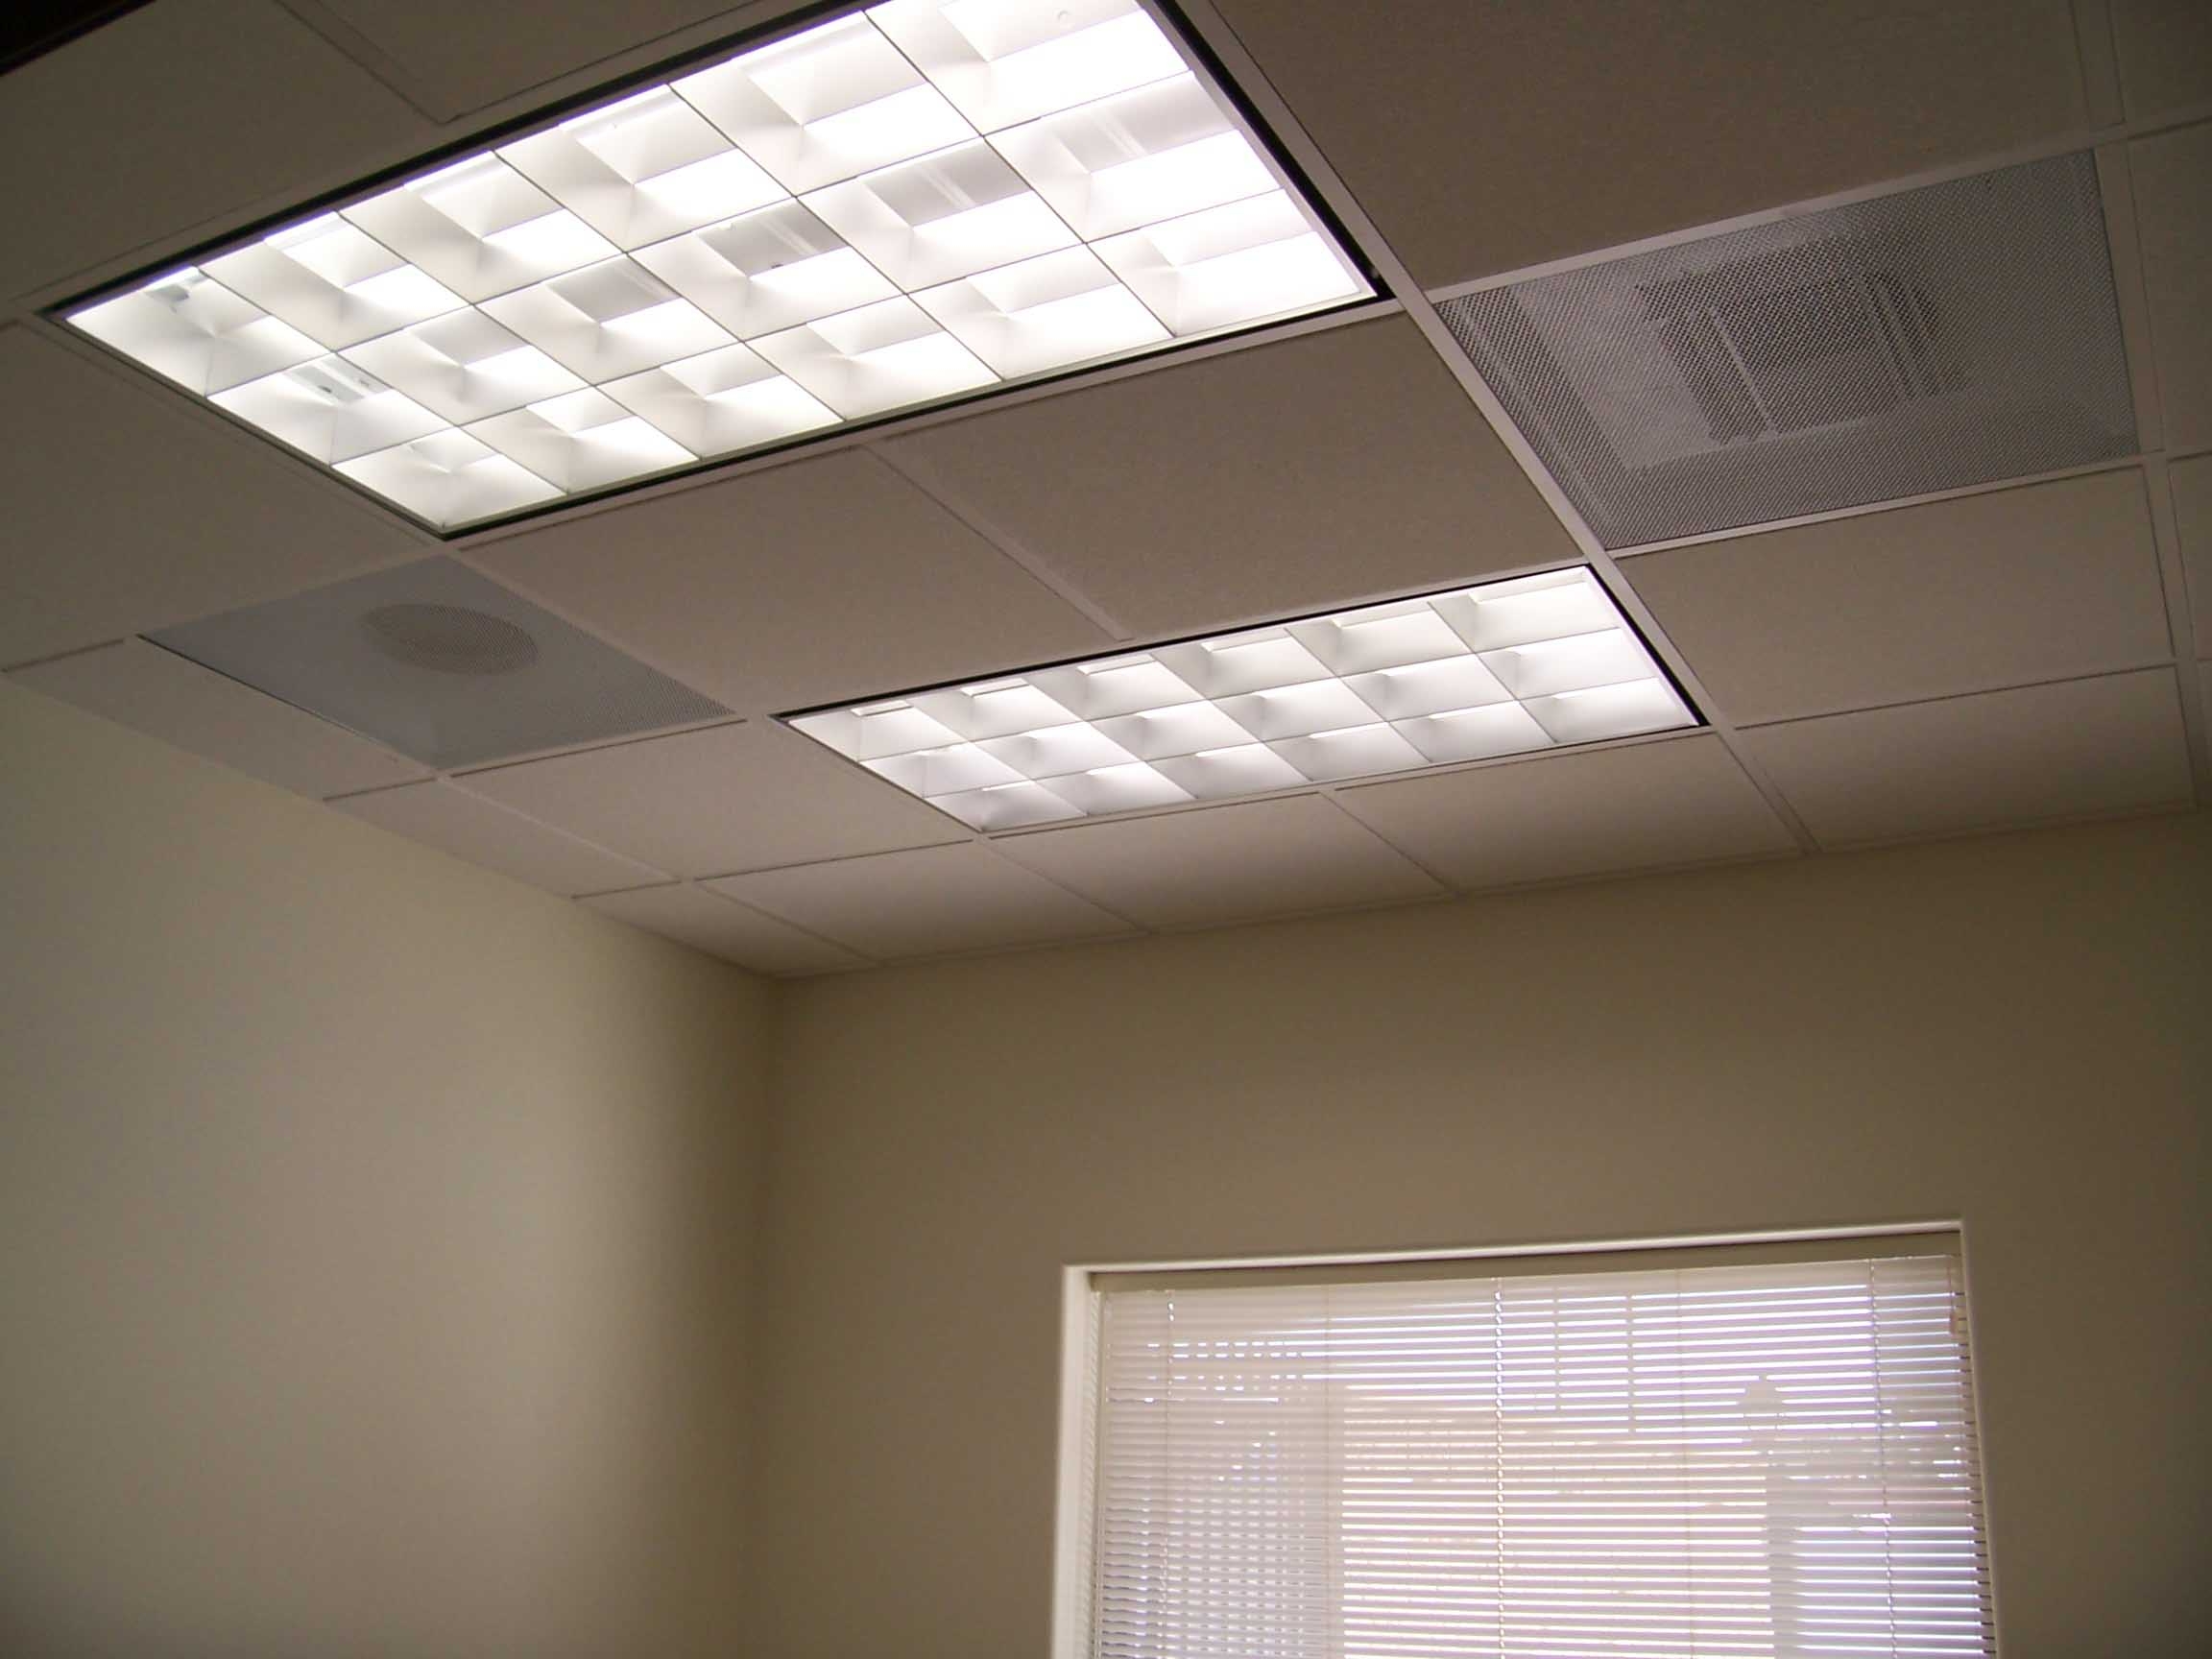 Fluorescent Light Ceiling Tiles10 benefits of fluorescent light ceiling panels warisan lighting